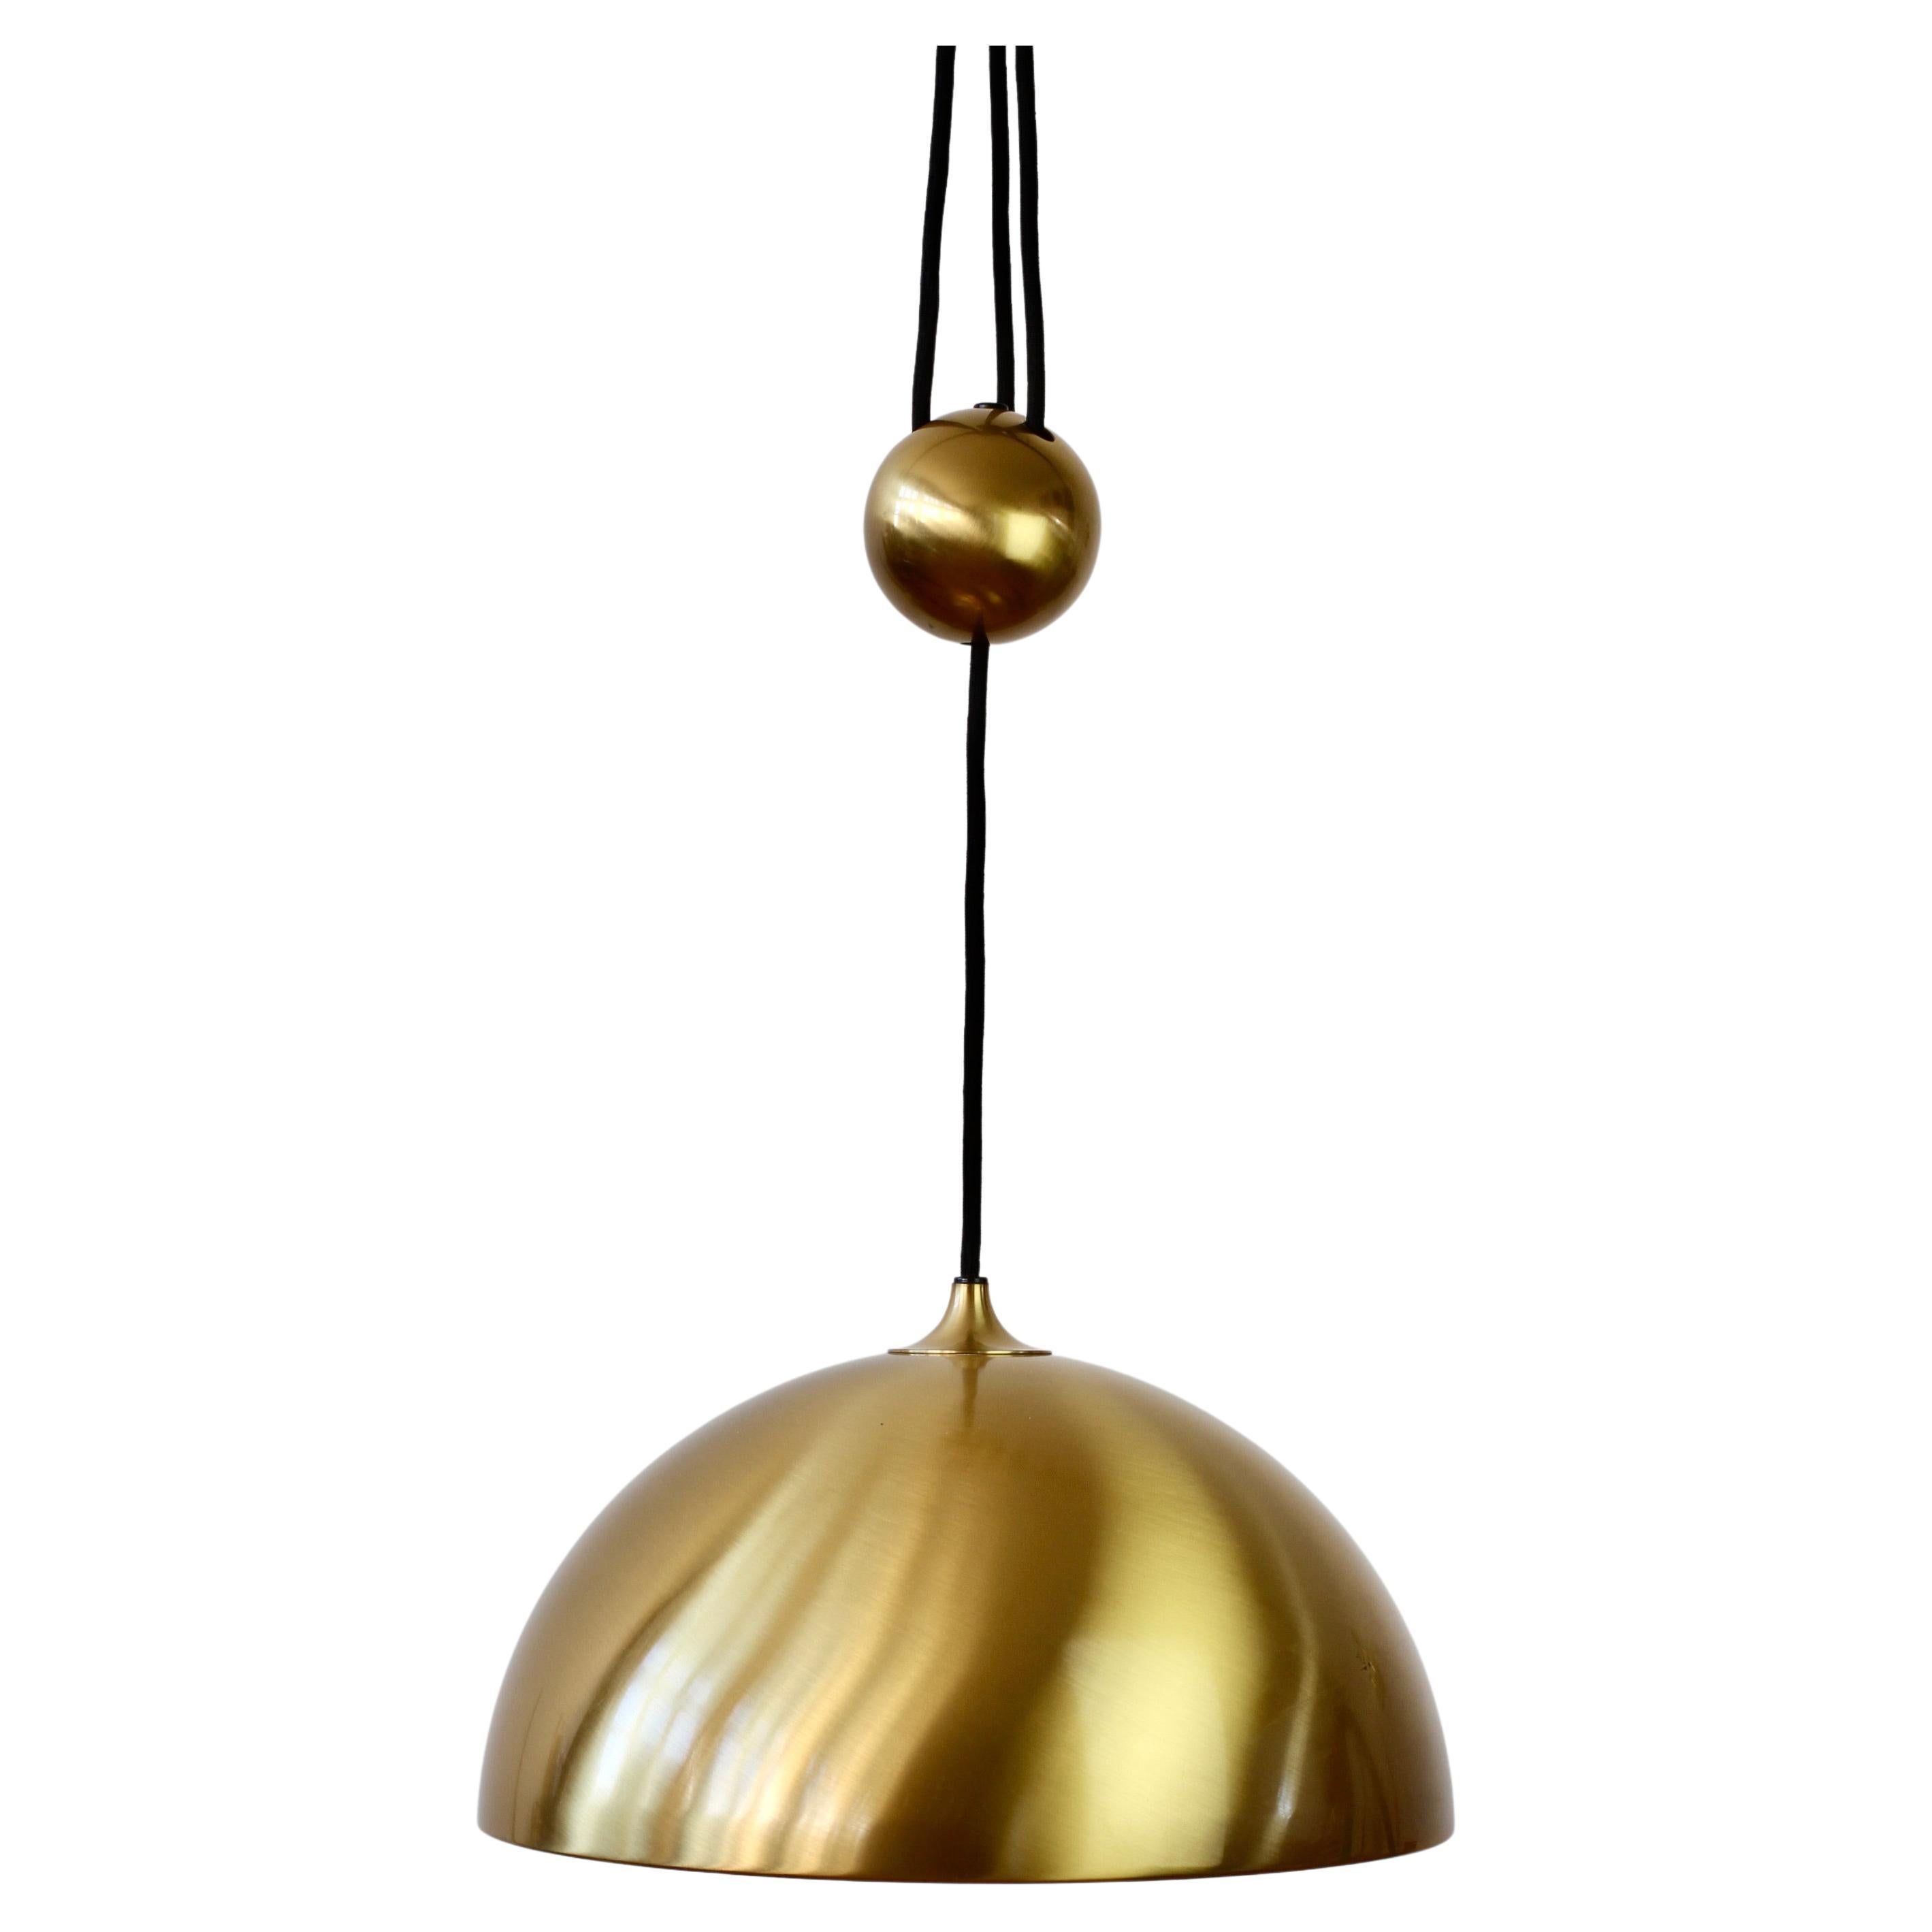 Florian Schulz Vintage Modernist Brass Counterbalanced Adjustable Pendant Light